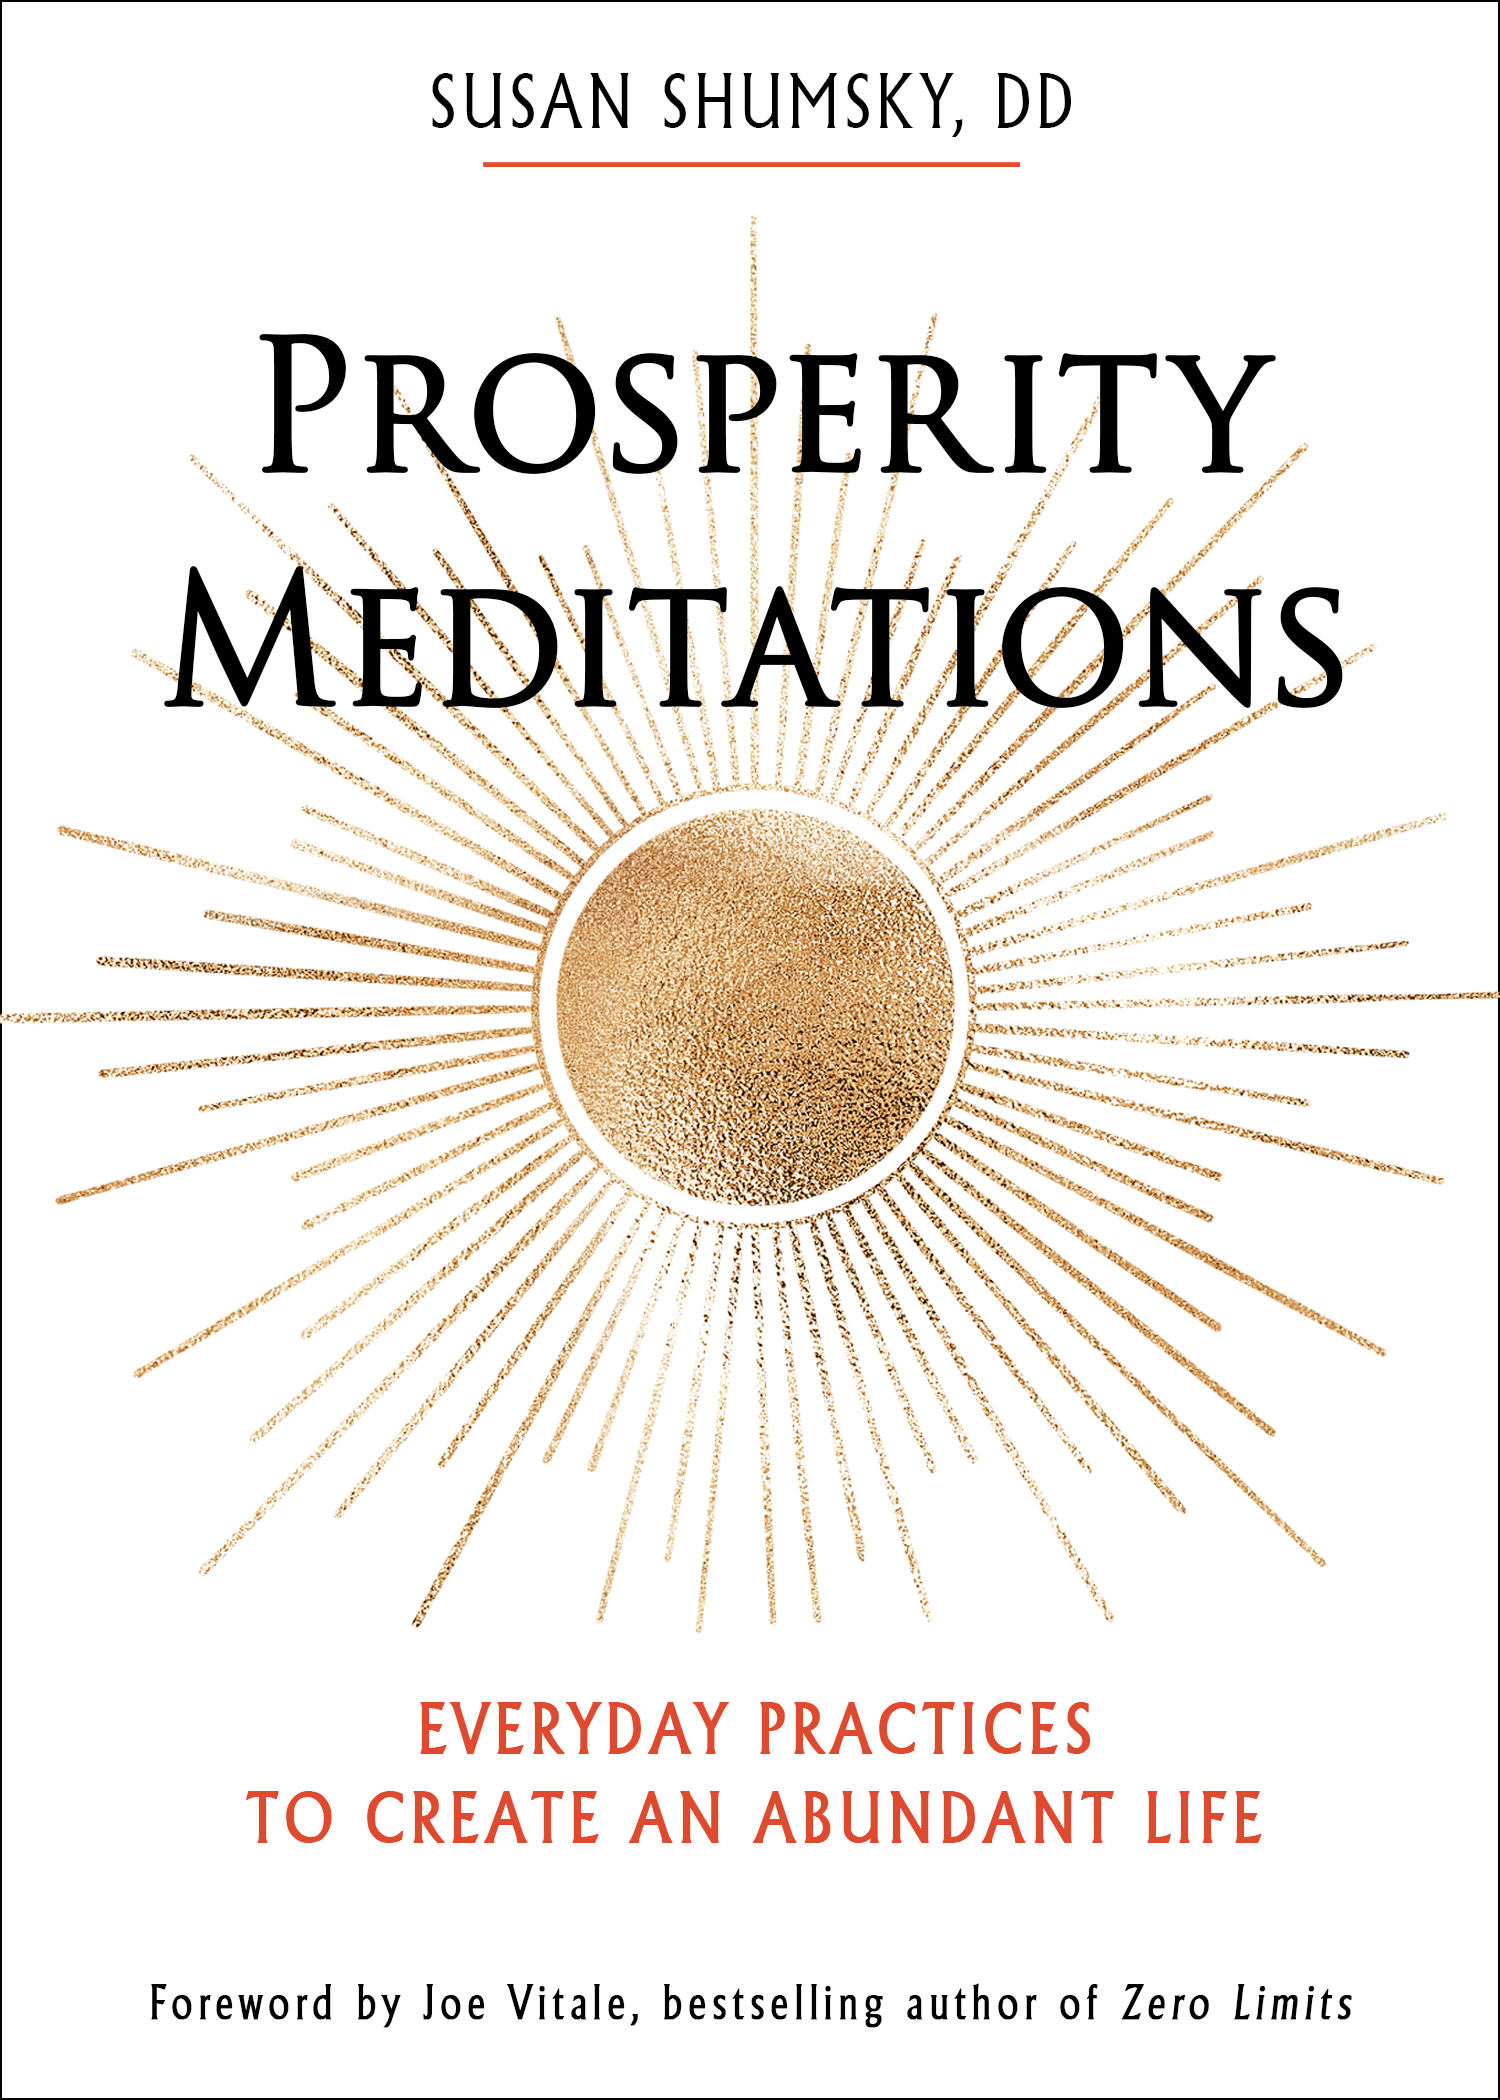 Prosperity Meditations